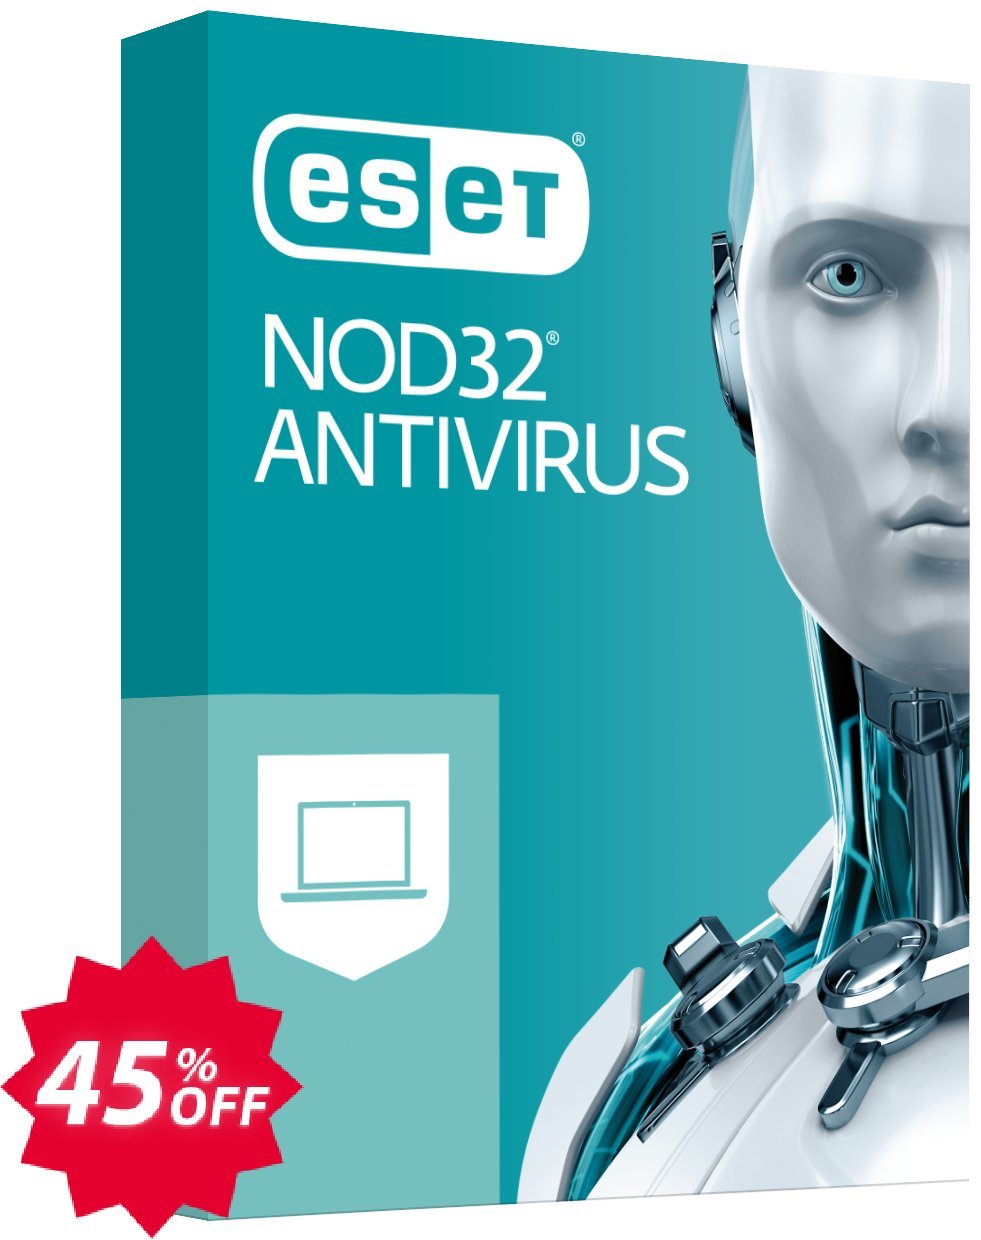 ESET NOD32 Antivirus -  2 Years 1 Device Coupon code 45% discount 